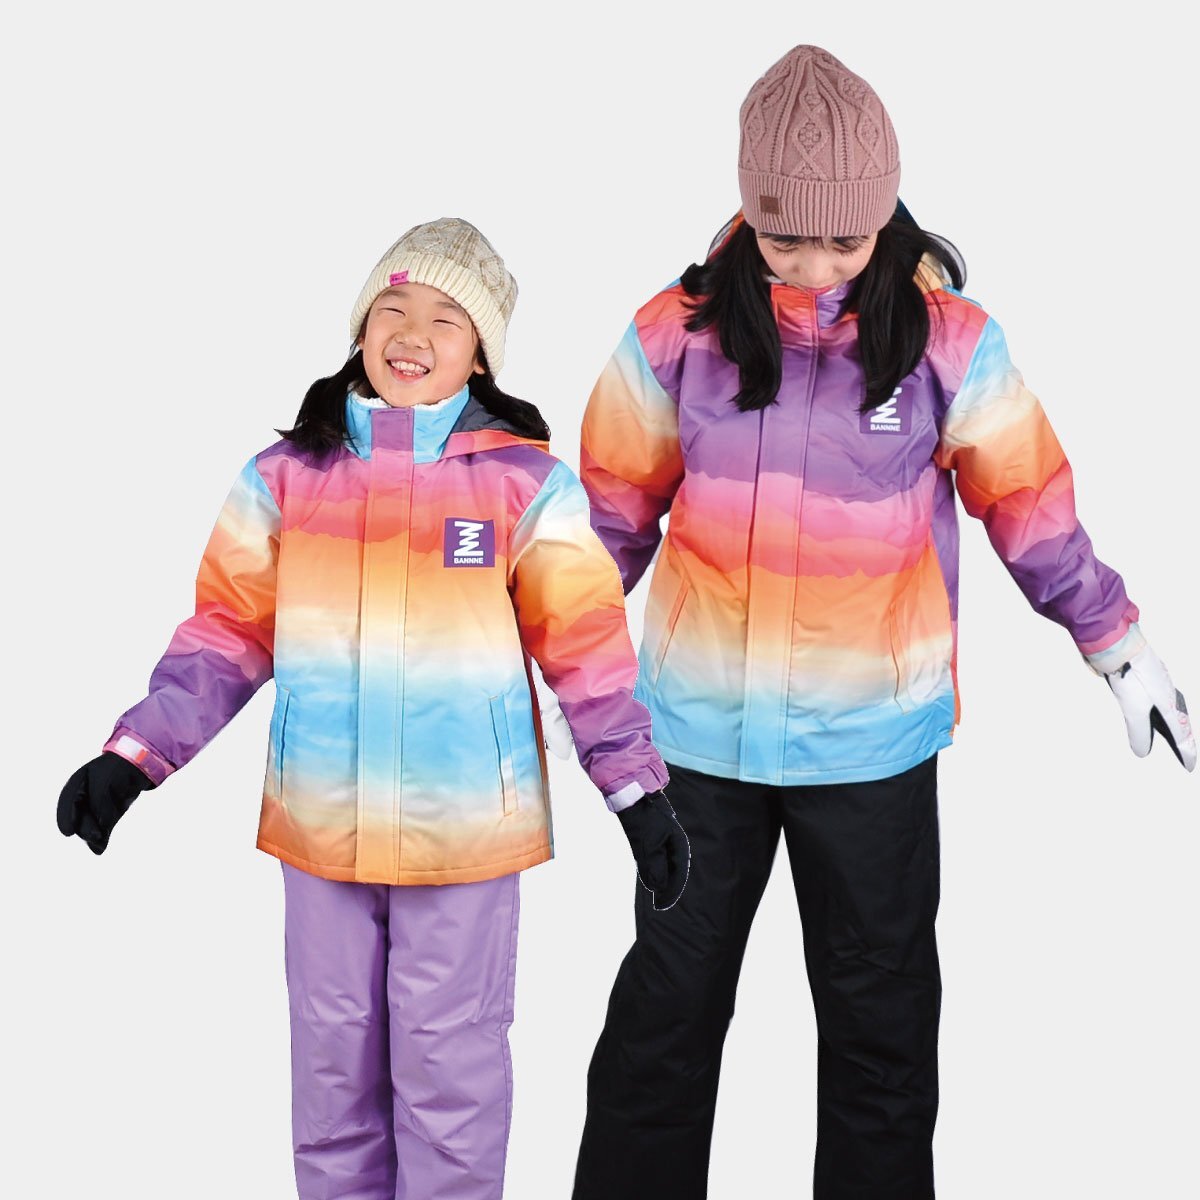 1525315-BANNNE/簡単パンツがうれしい キッズ ジュニア スキーウェア上下セット スノーウェア 雪遊び